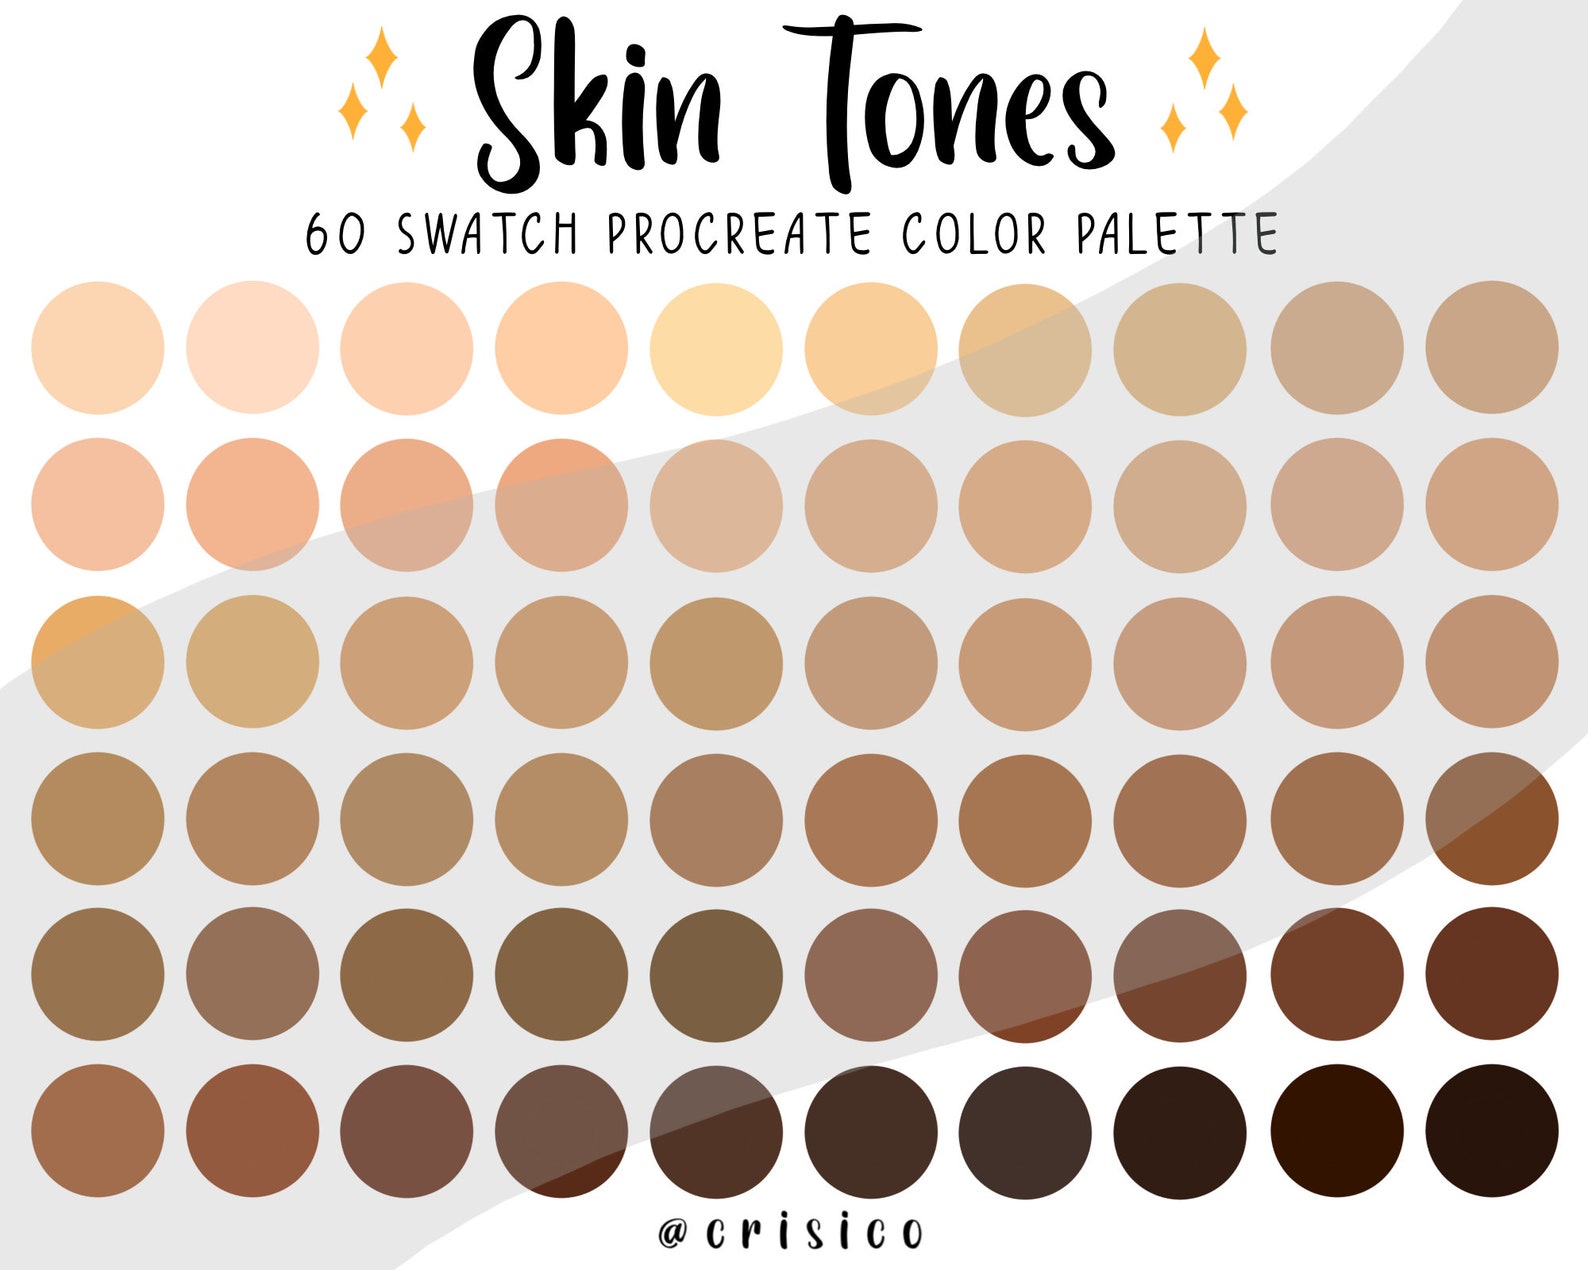 Best nail polish shades for dark skin tones - wide 4